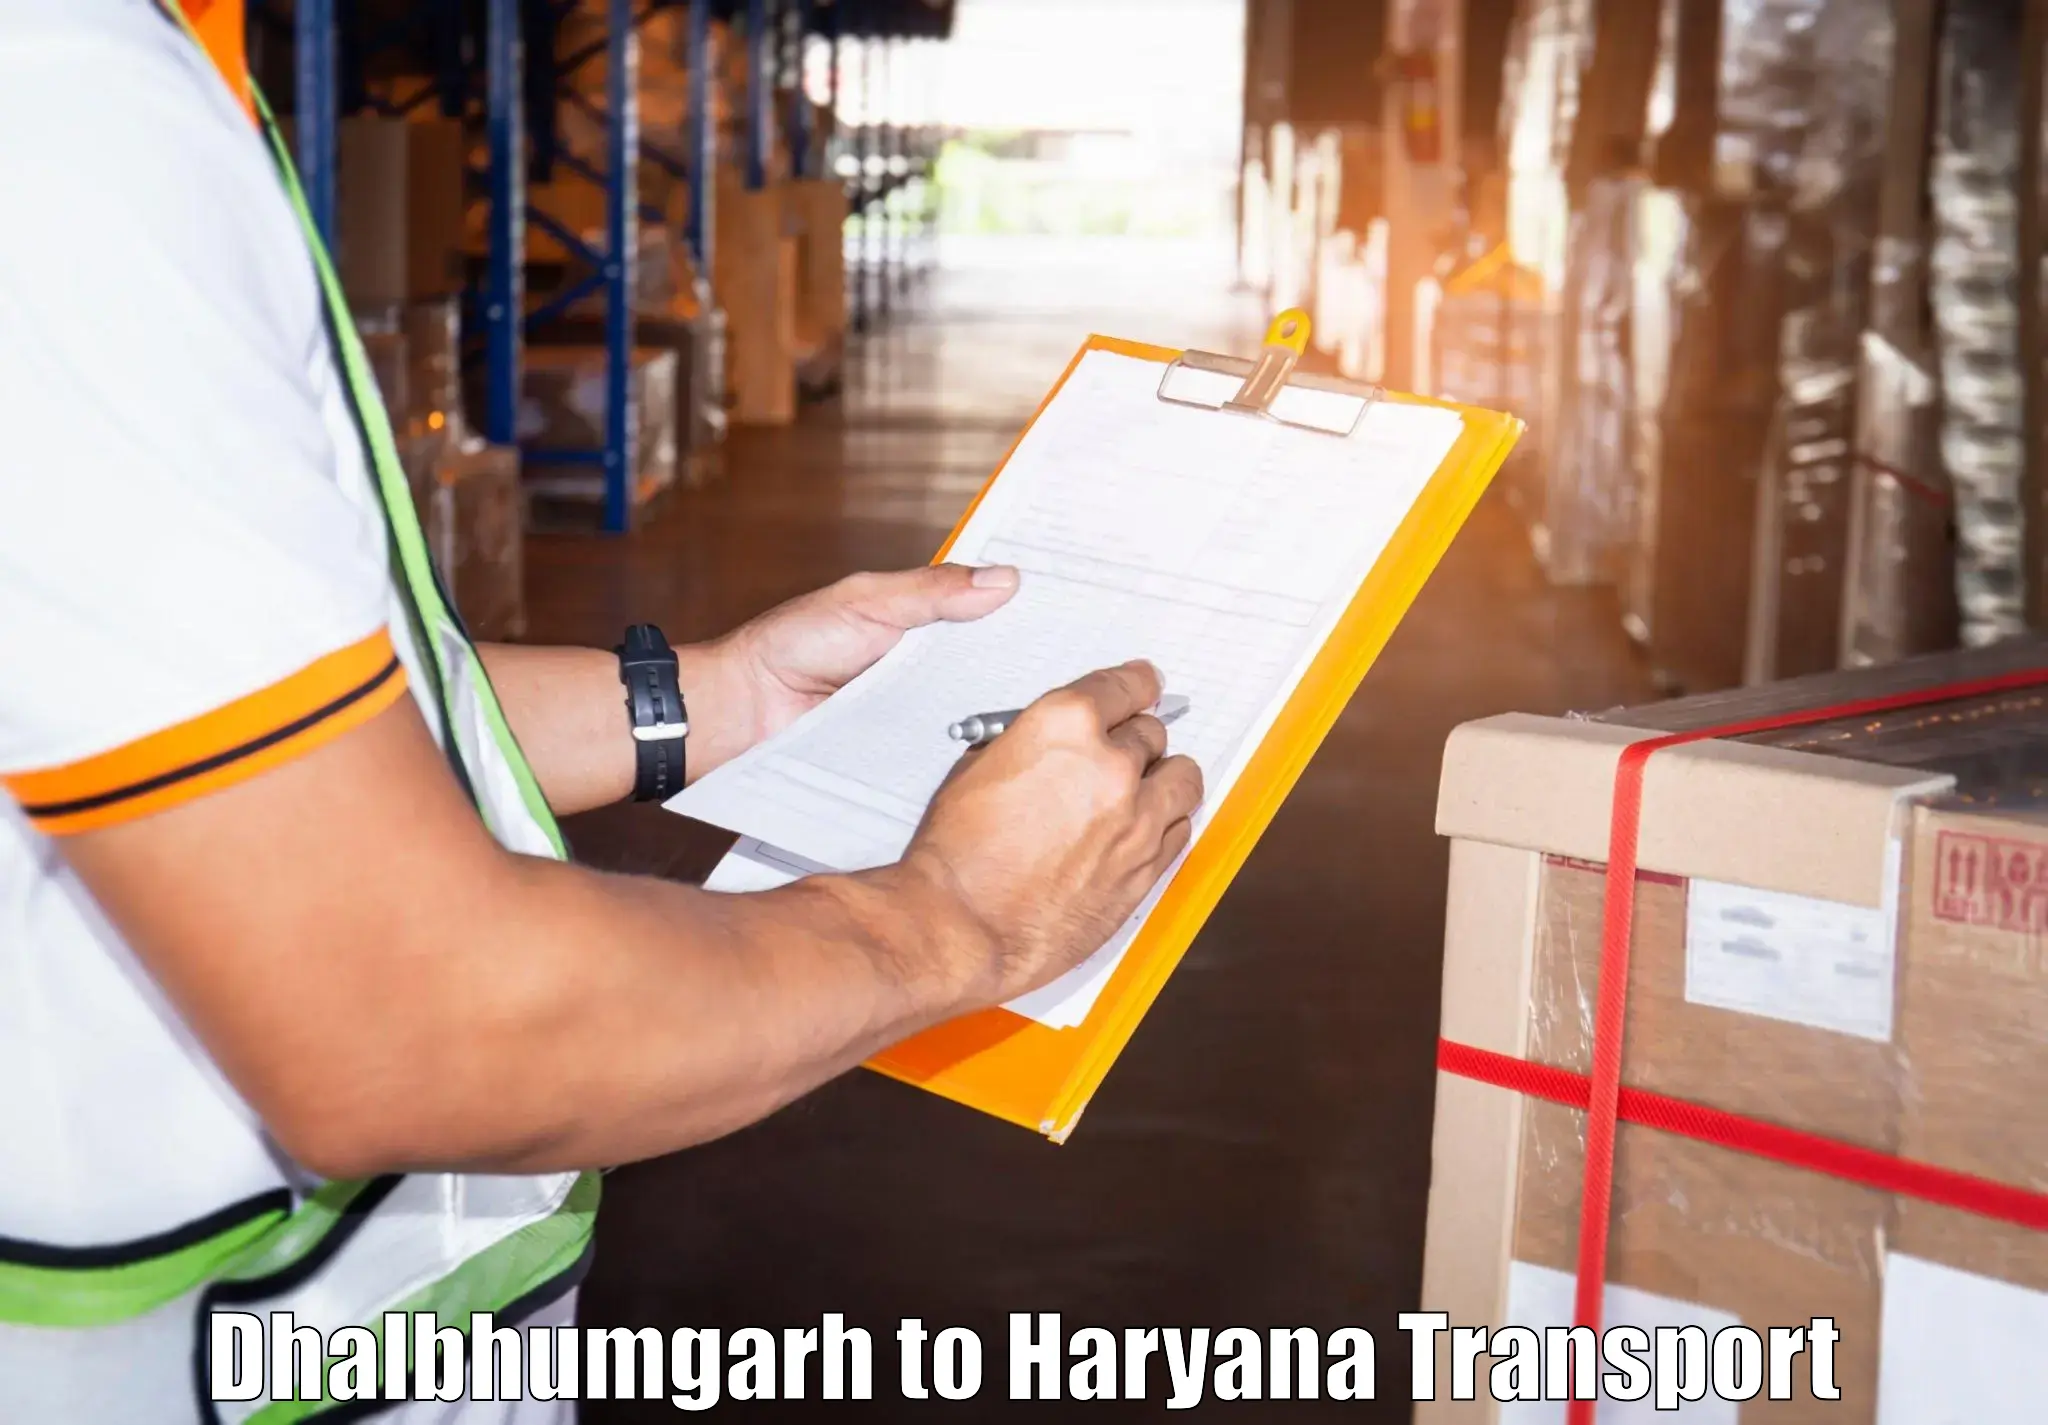 Truck transport companies in India Dhalbhumgarh to Panipat